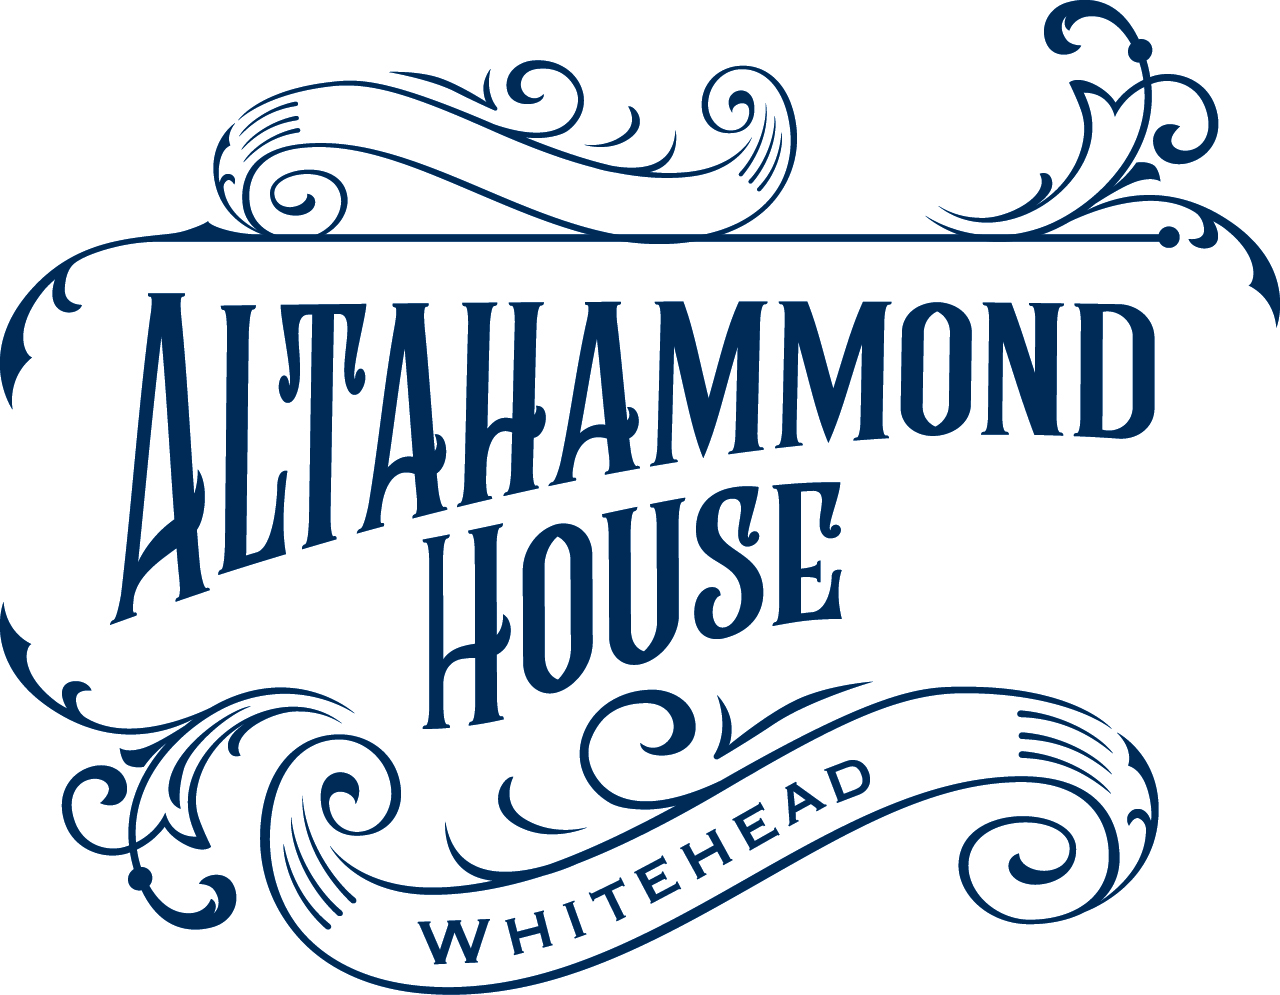 Altahammond House